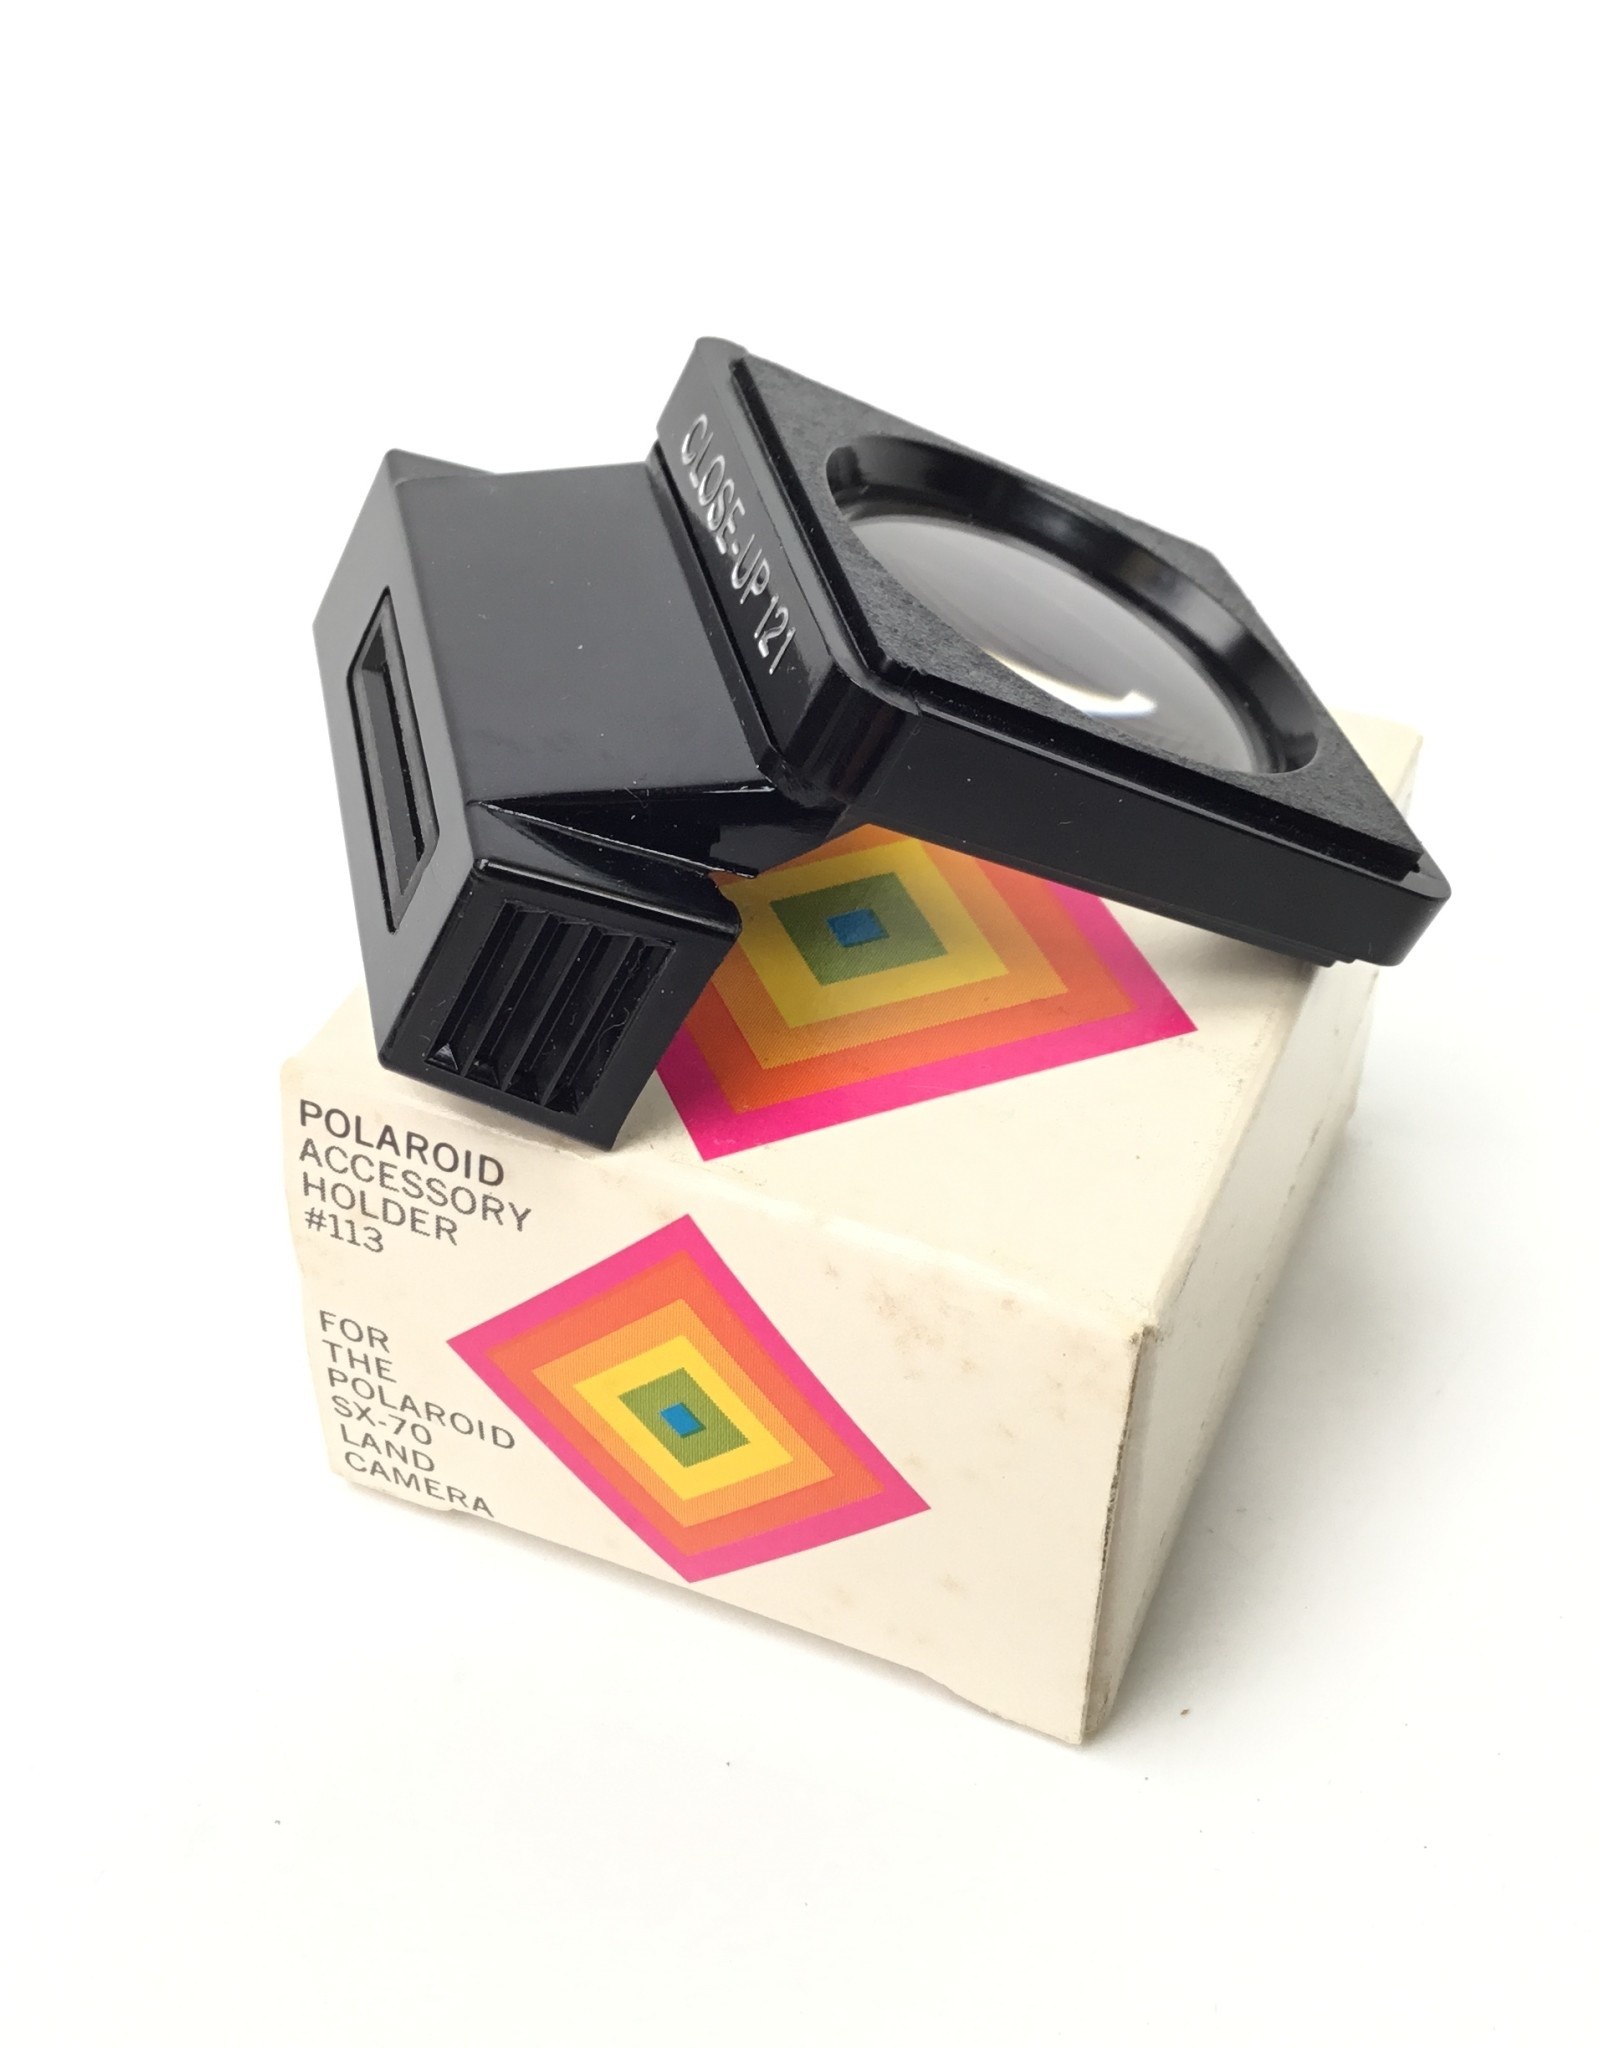 POLAROID Polaroid Accessory Holder 113 for SX-70 Land Camera in Box Used Good